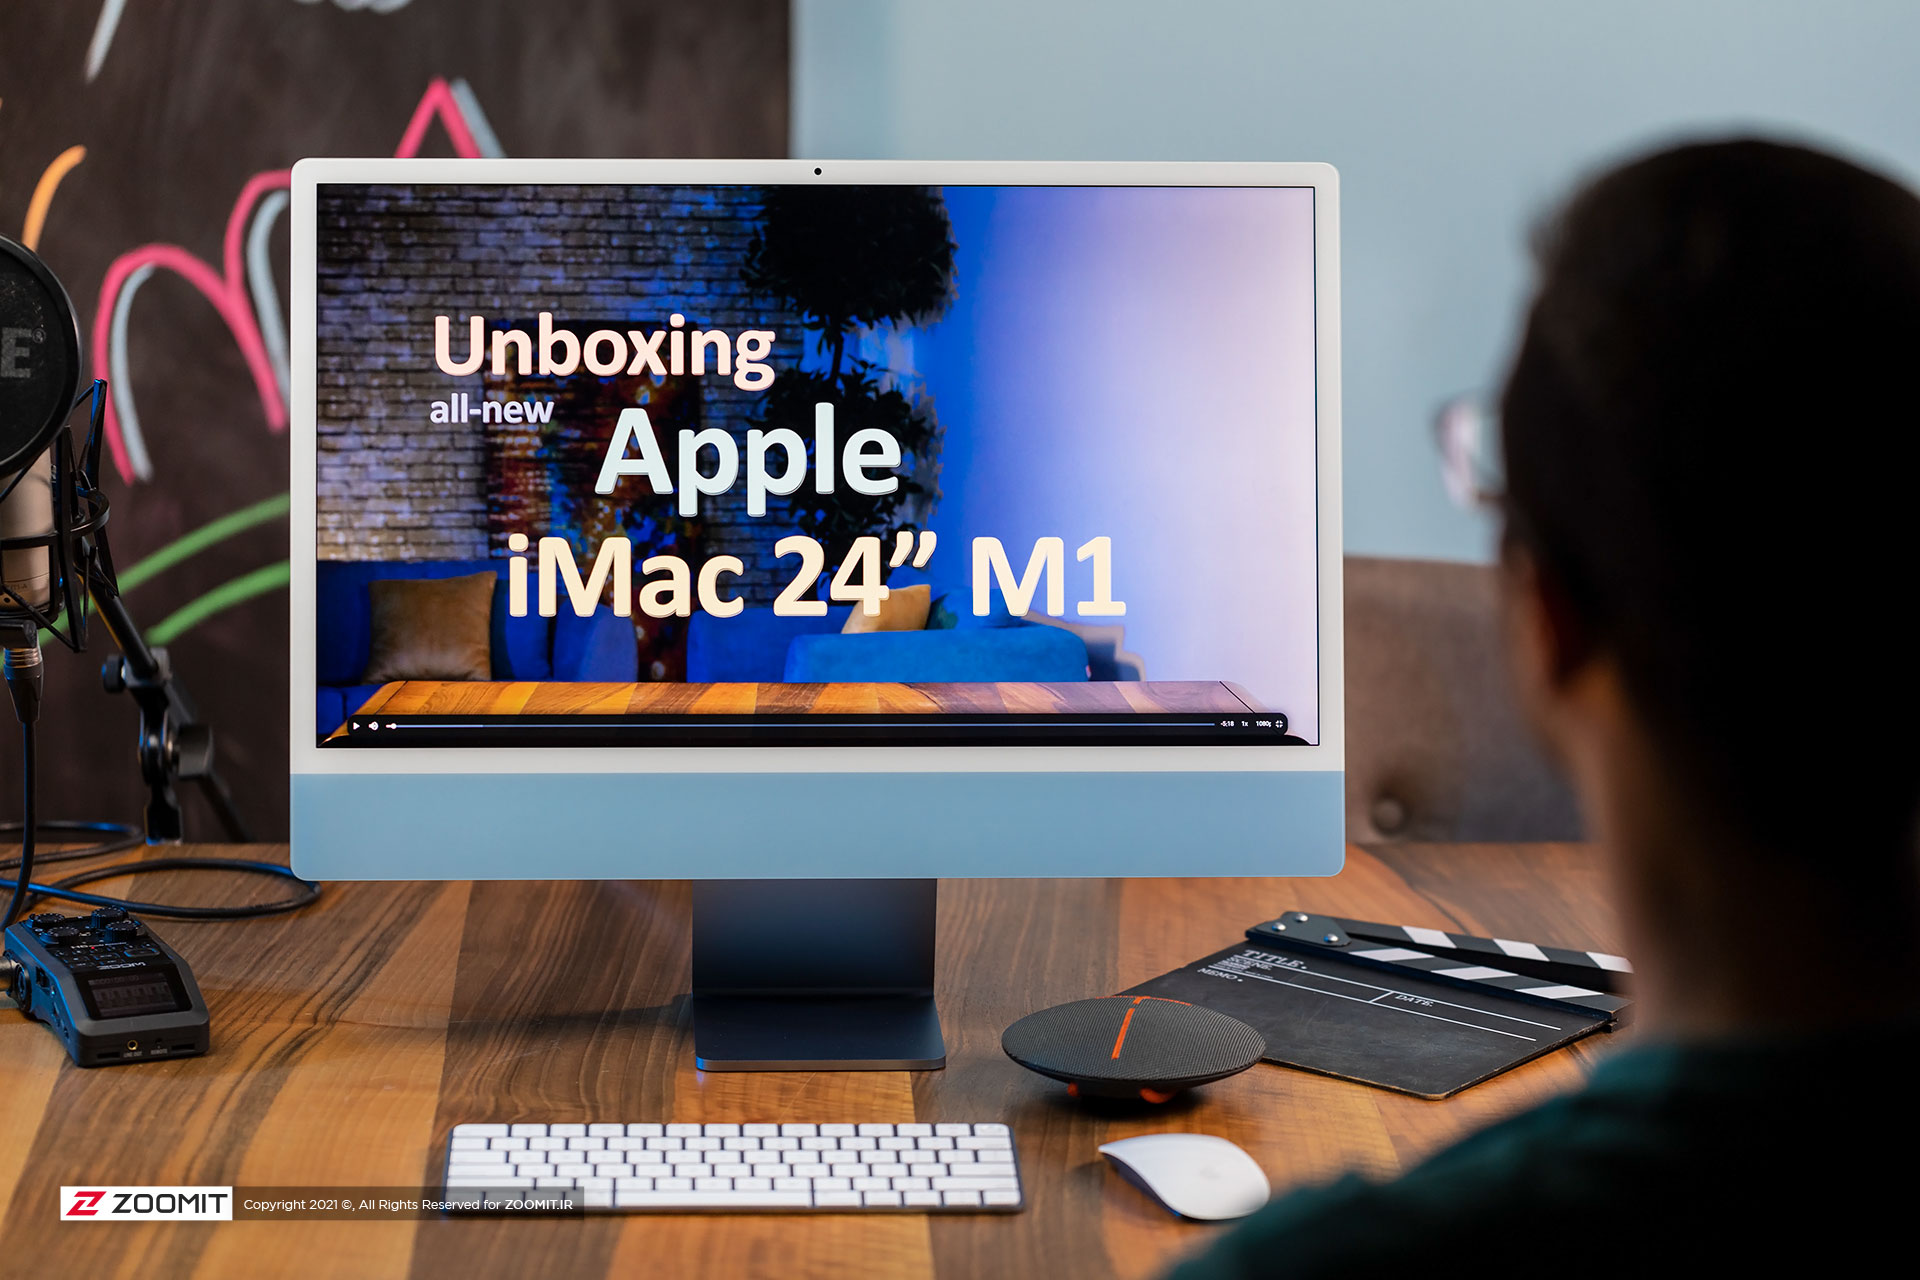 Play video on 24-inch iMac M1